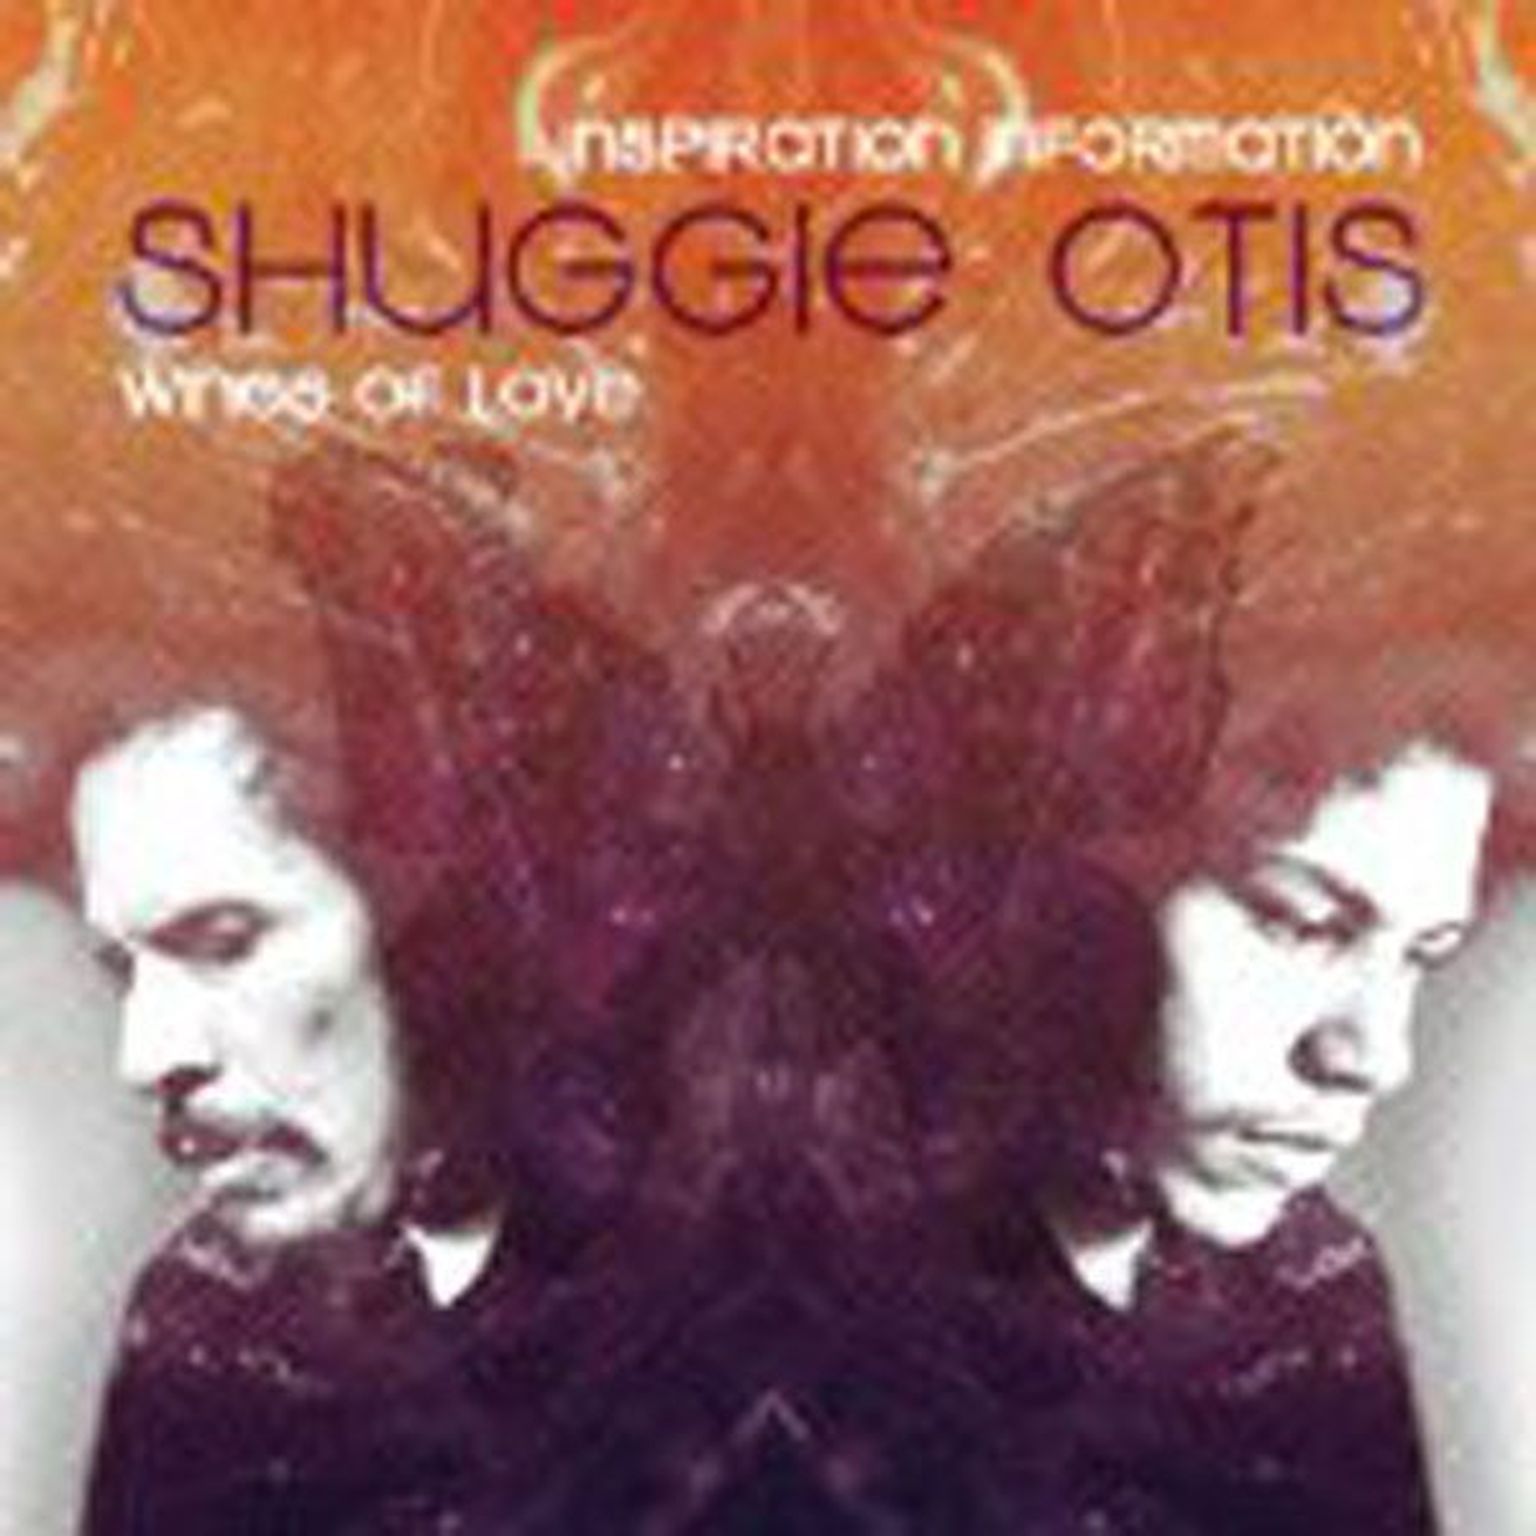 Shuggie Otis
Inspiration Information / 
Wings Of Love 
(Epic)